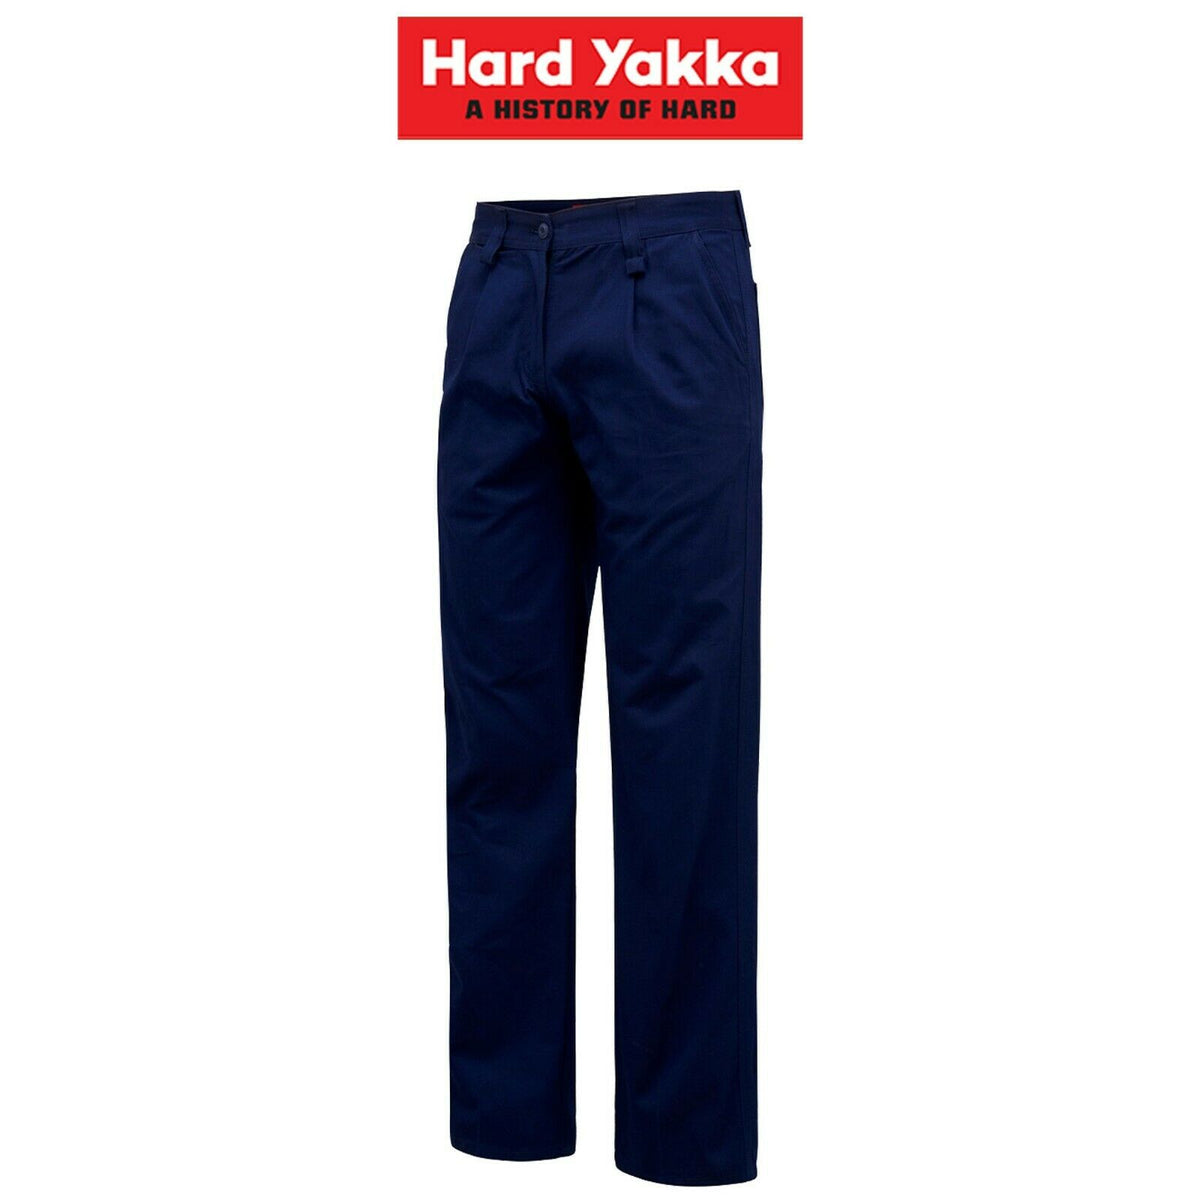 Womens Hard Yakka Work Pants Modern Comfy Fit Cotton Drill Tough Y08840